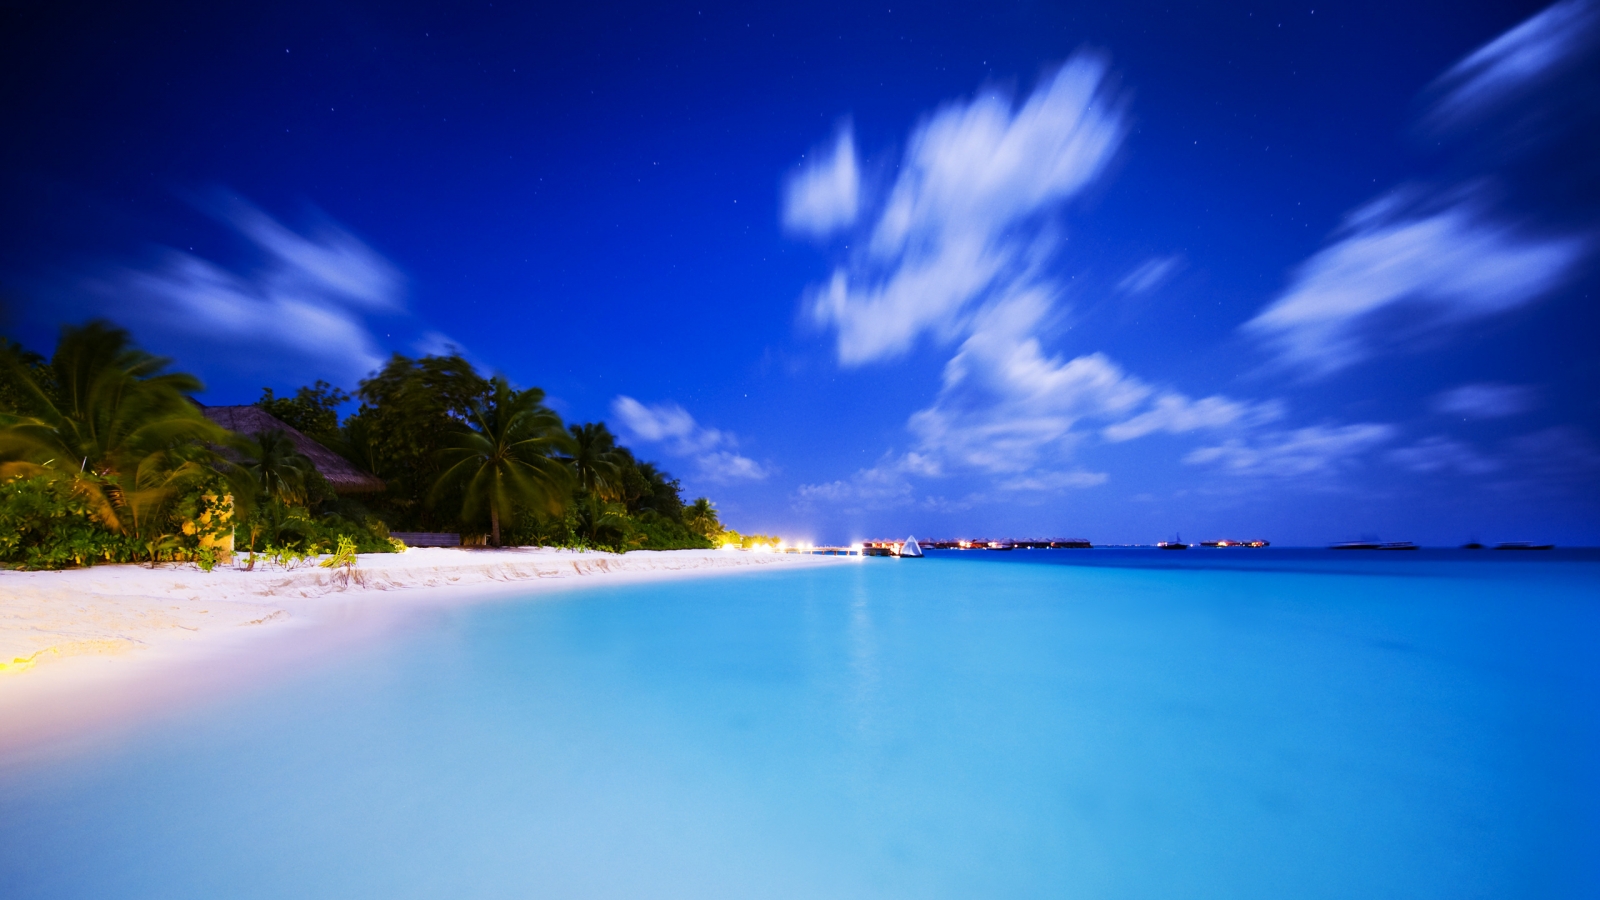 Maldivian Night for 1600 x 900 HDTV resolution